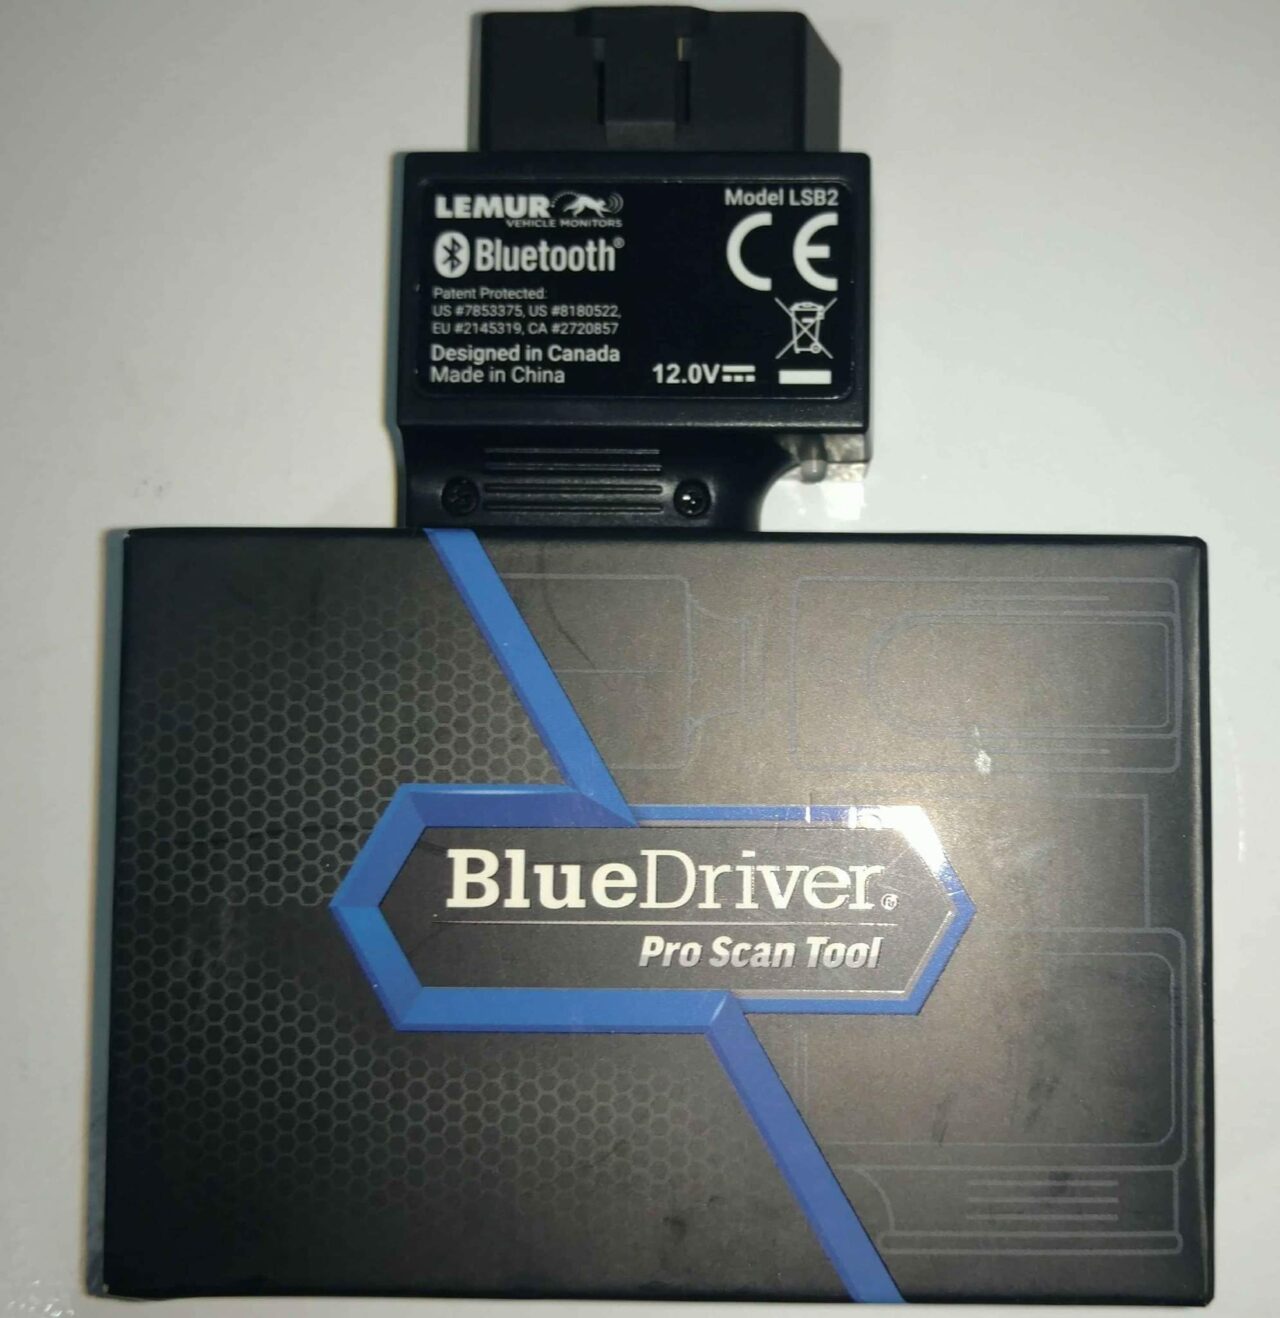 bluedriver unboxing
